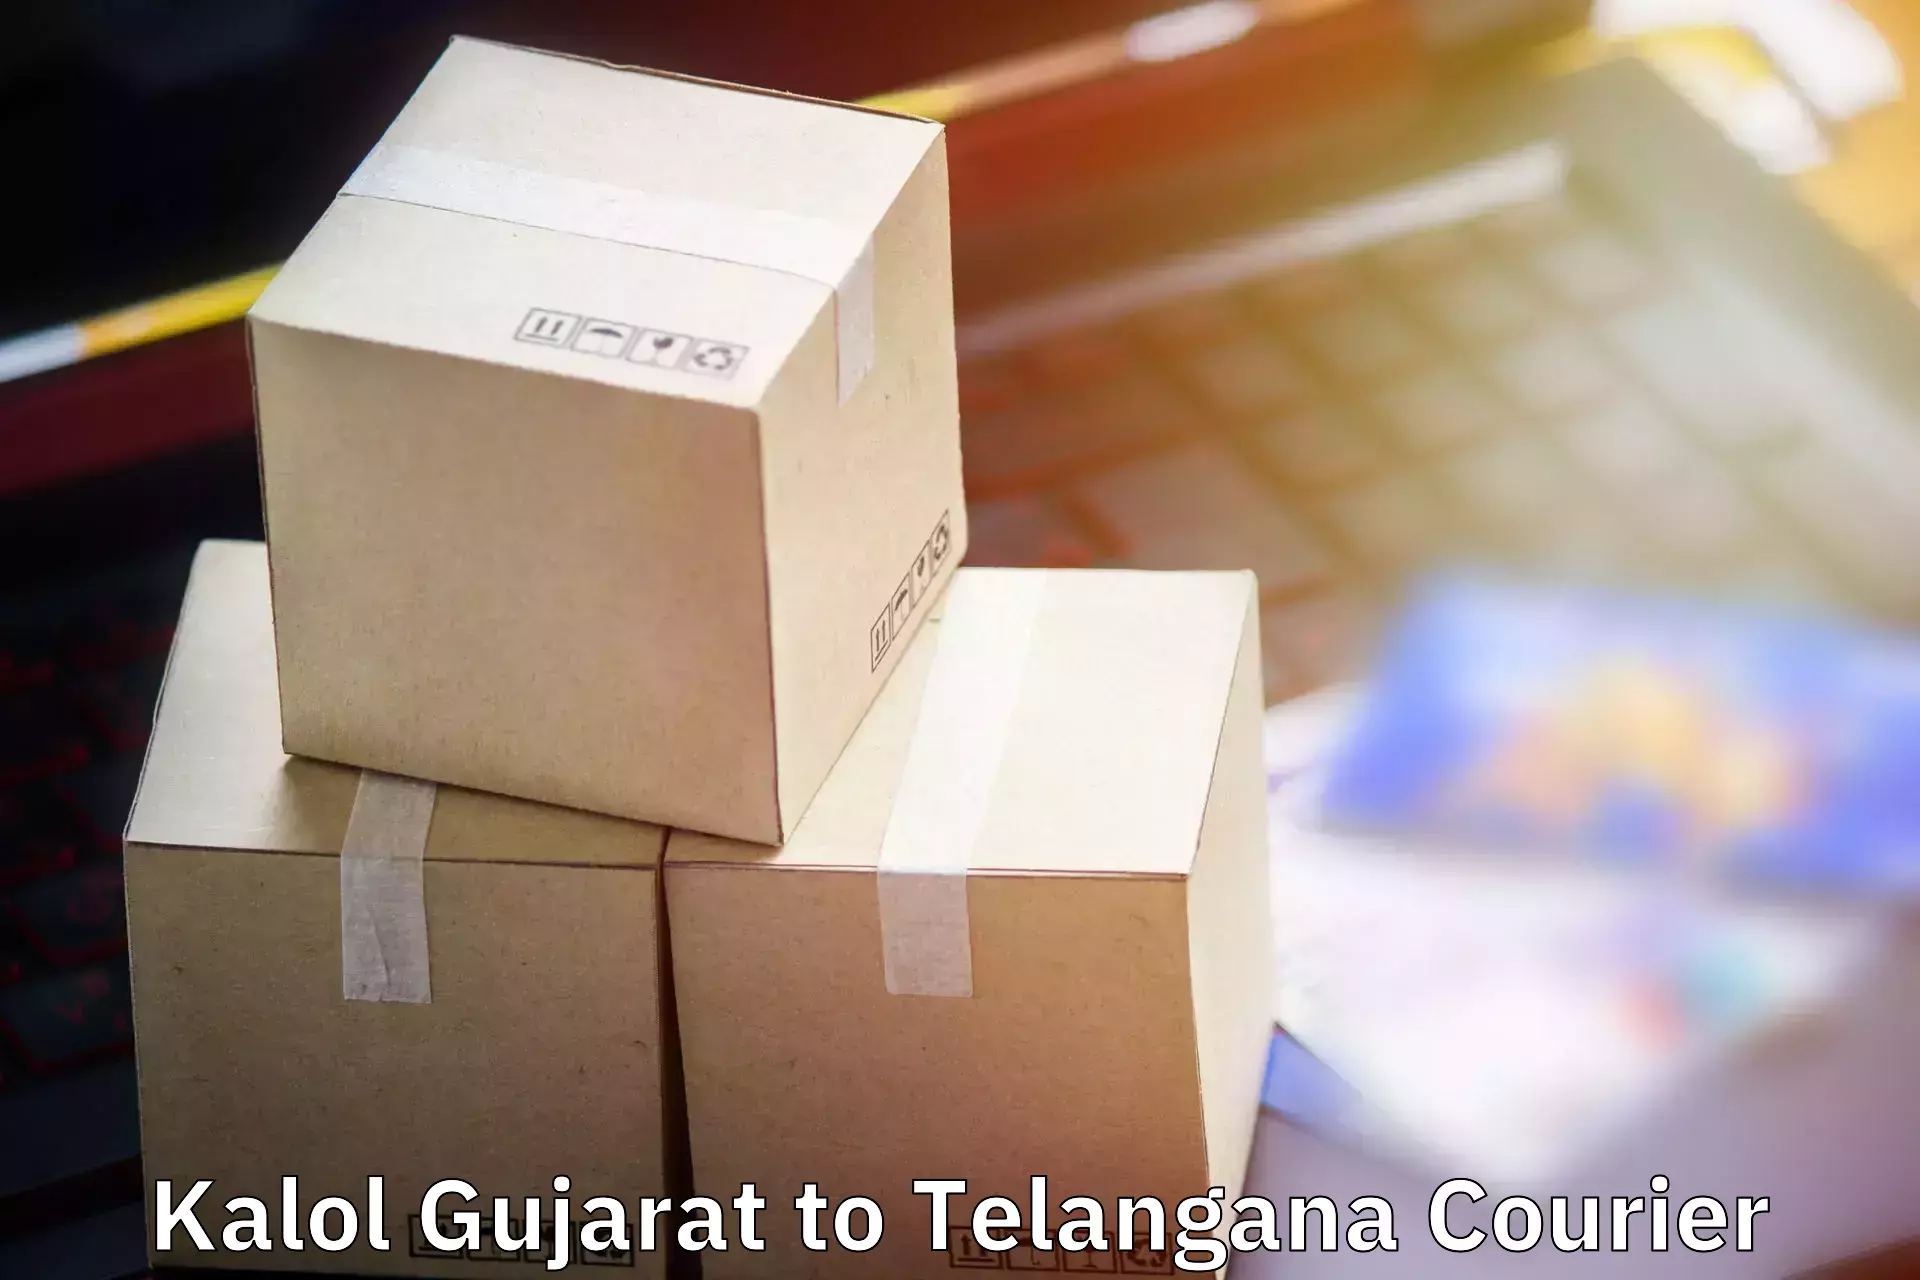 Door-to-door baggage service Kalol Gujarat to Trimulgherry